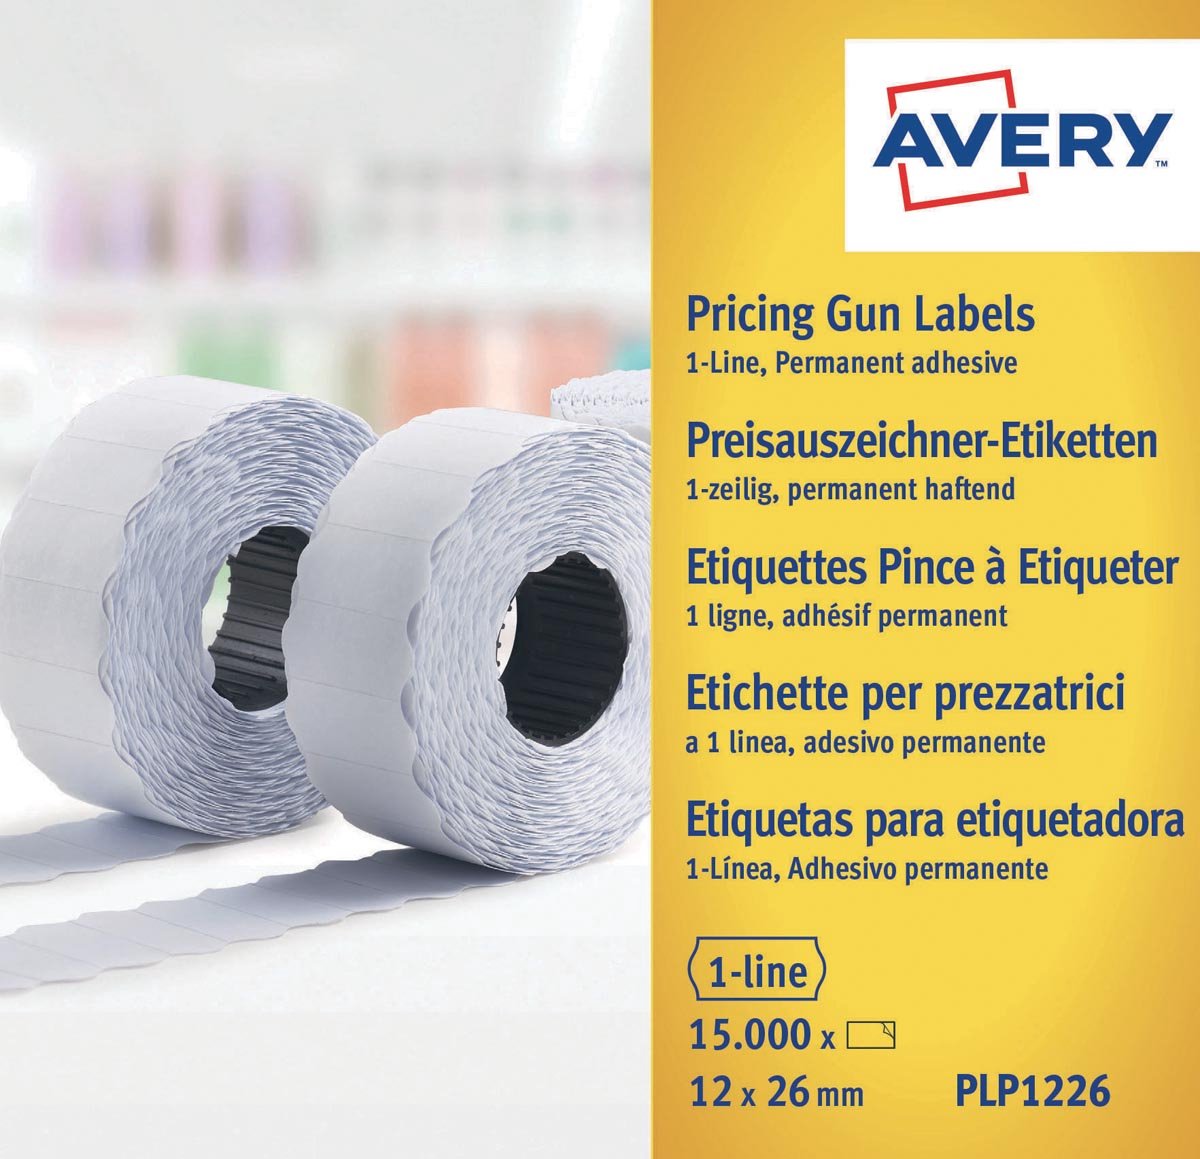 Avery-Zweckform Prijslabels PLP1226 Permanent hechtend Breedte etiket: 26 mm Hoogte etiket: 12 mm Wit 15000 stuk(s) - Avery-Zweckform